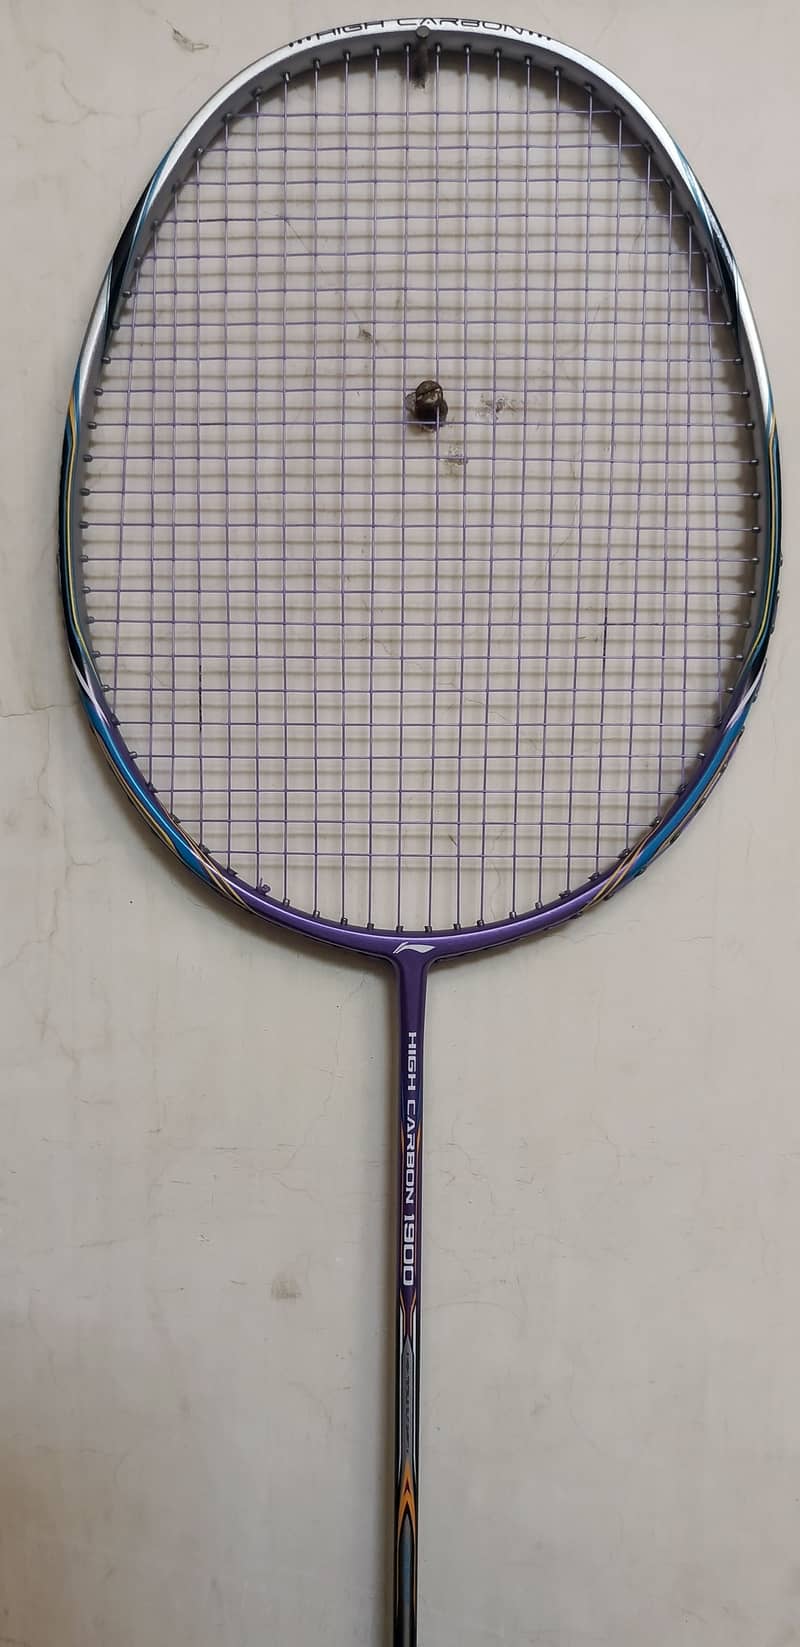 LI-NING HC 1900 Purple | Badminton Racket | Carbon Frame racket 1